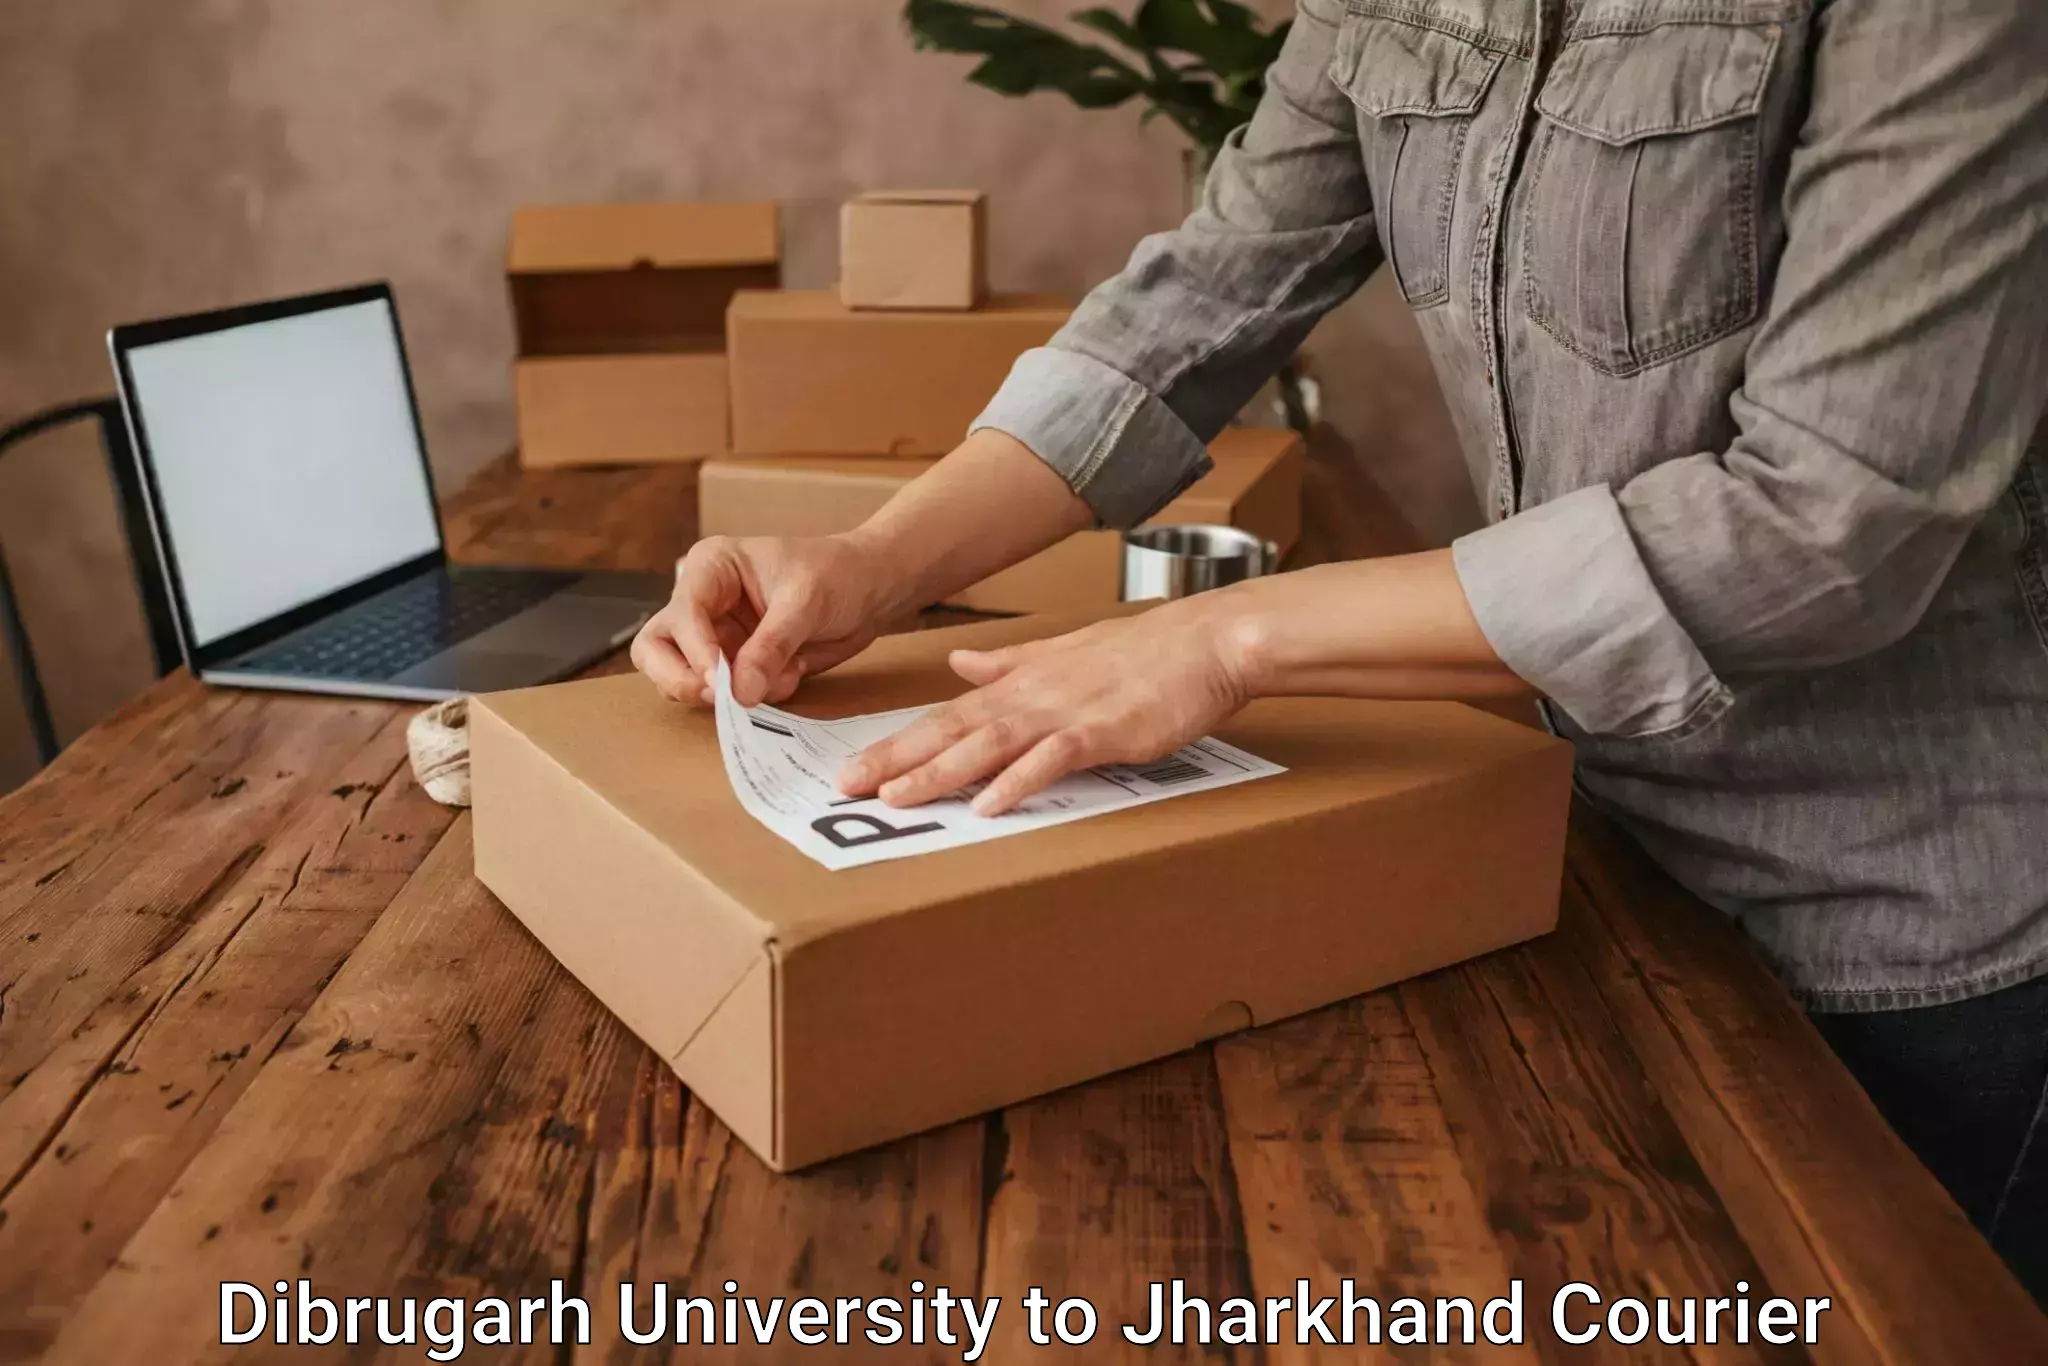 Express mail service Dibrugarh University to Jharkhand